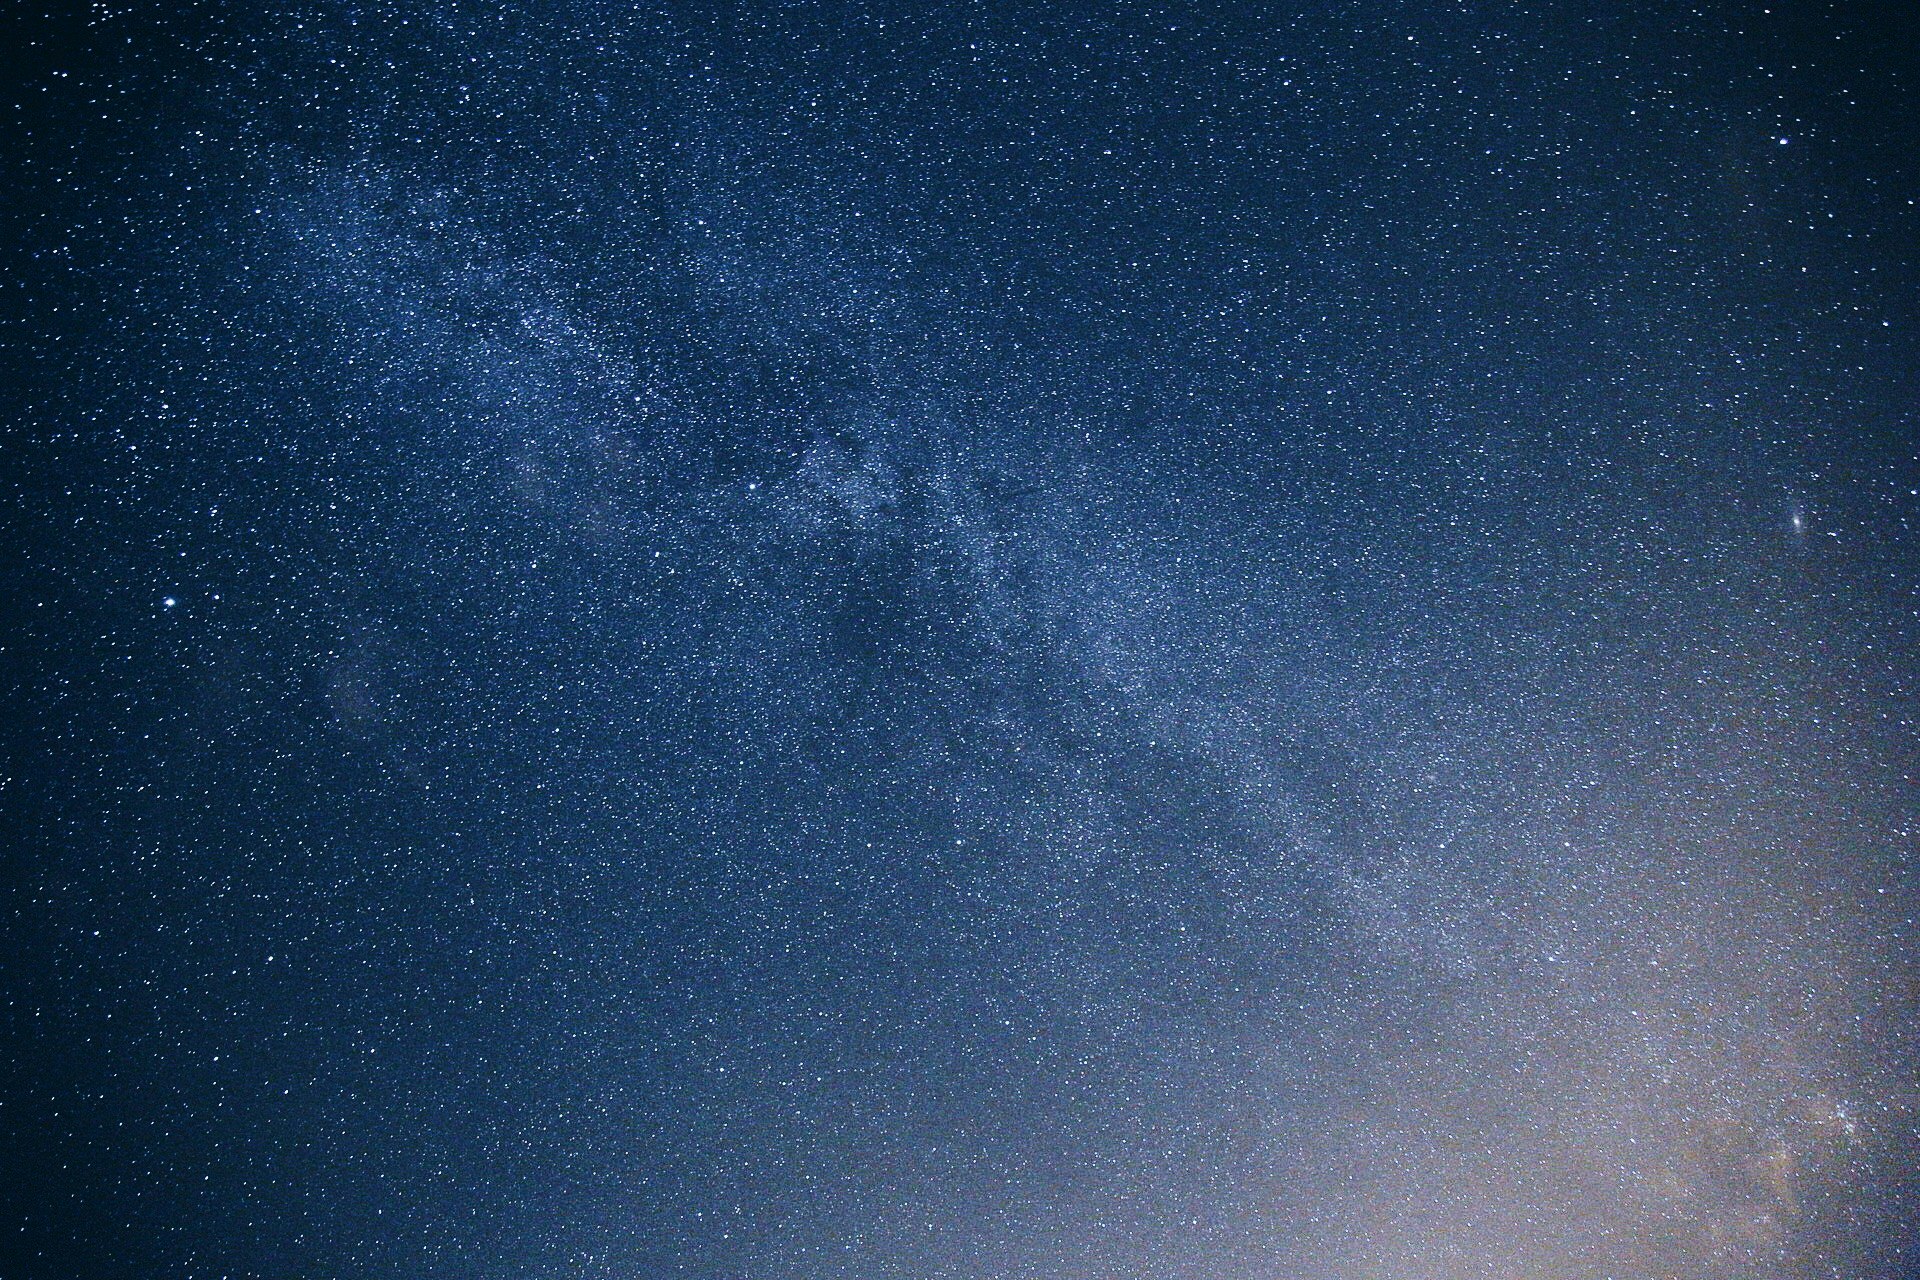 sky photo during nighttime